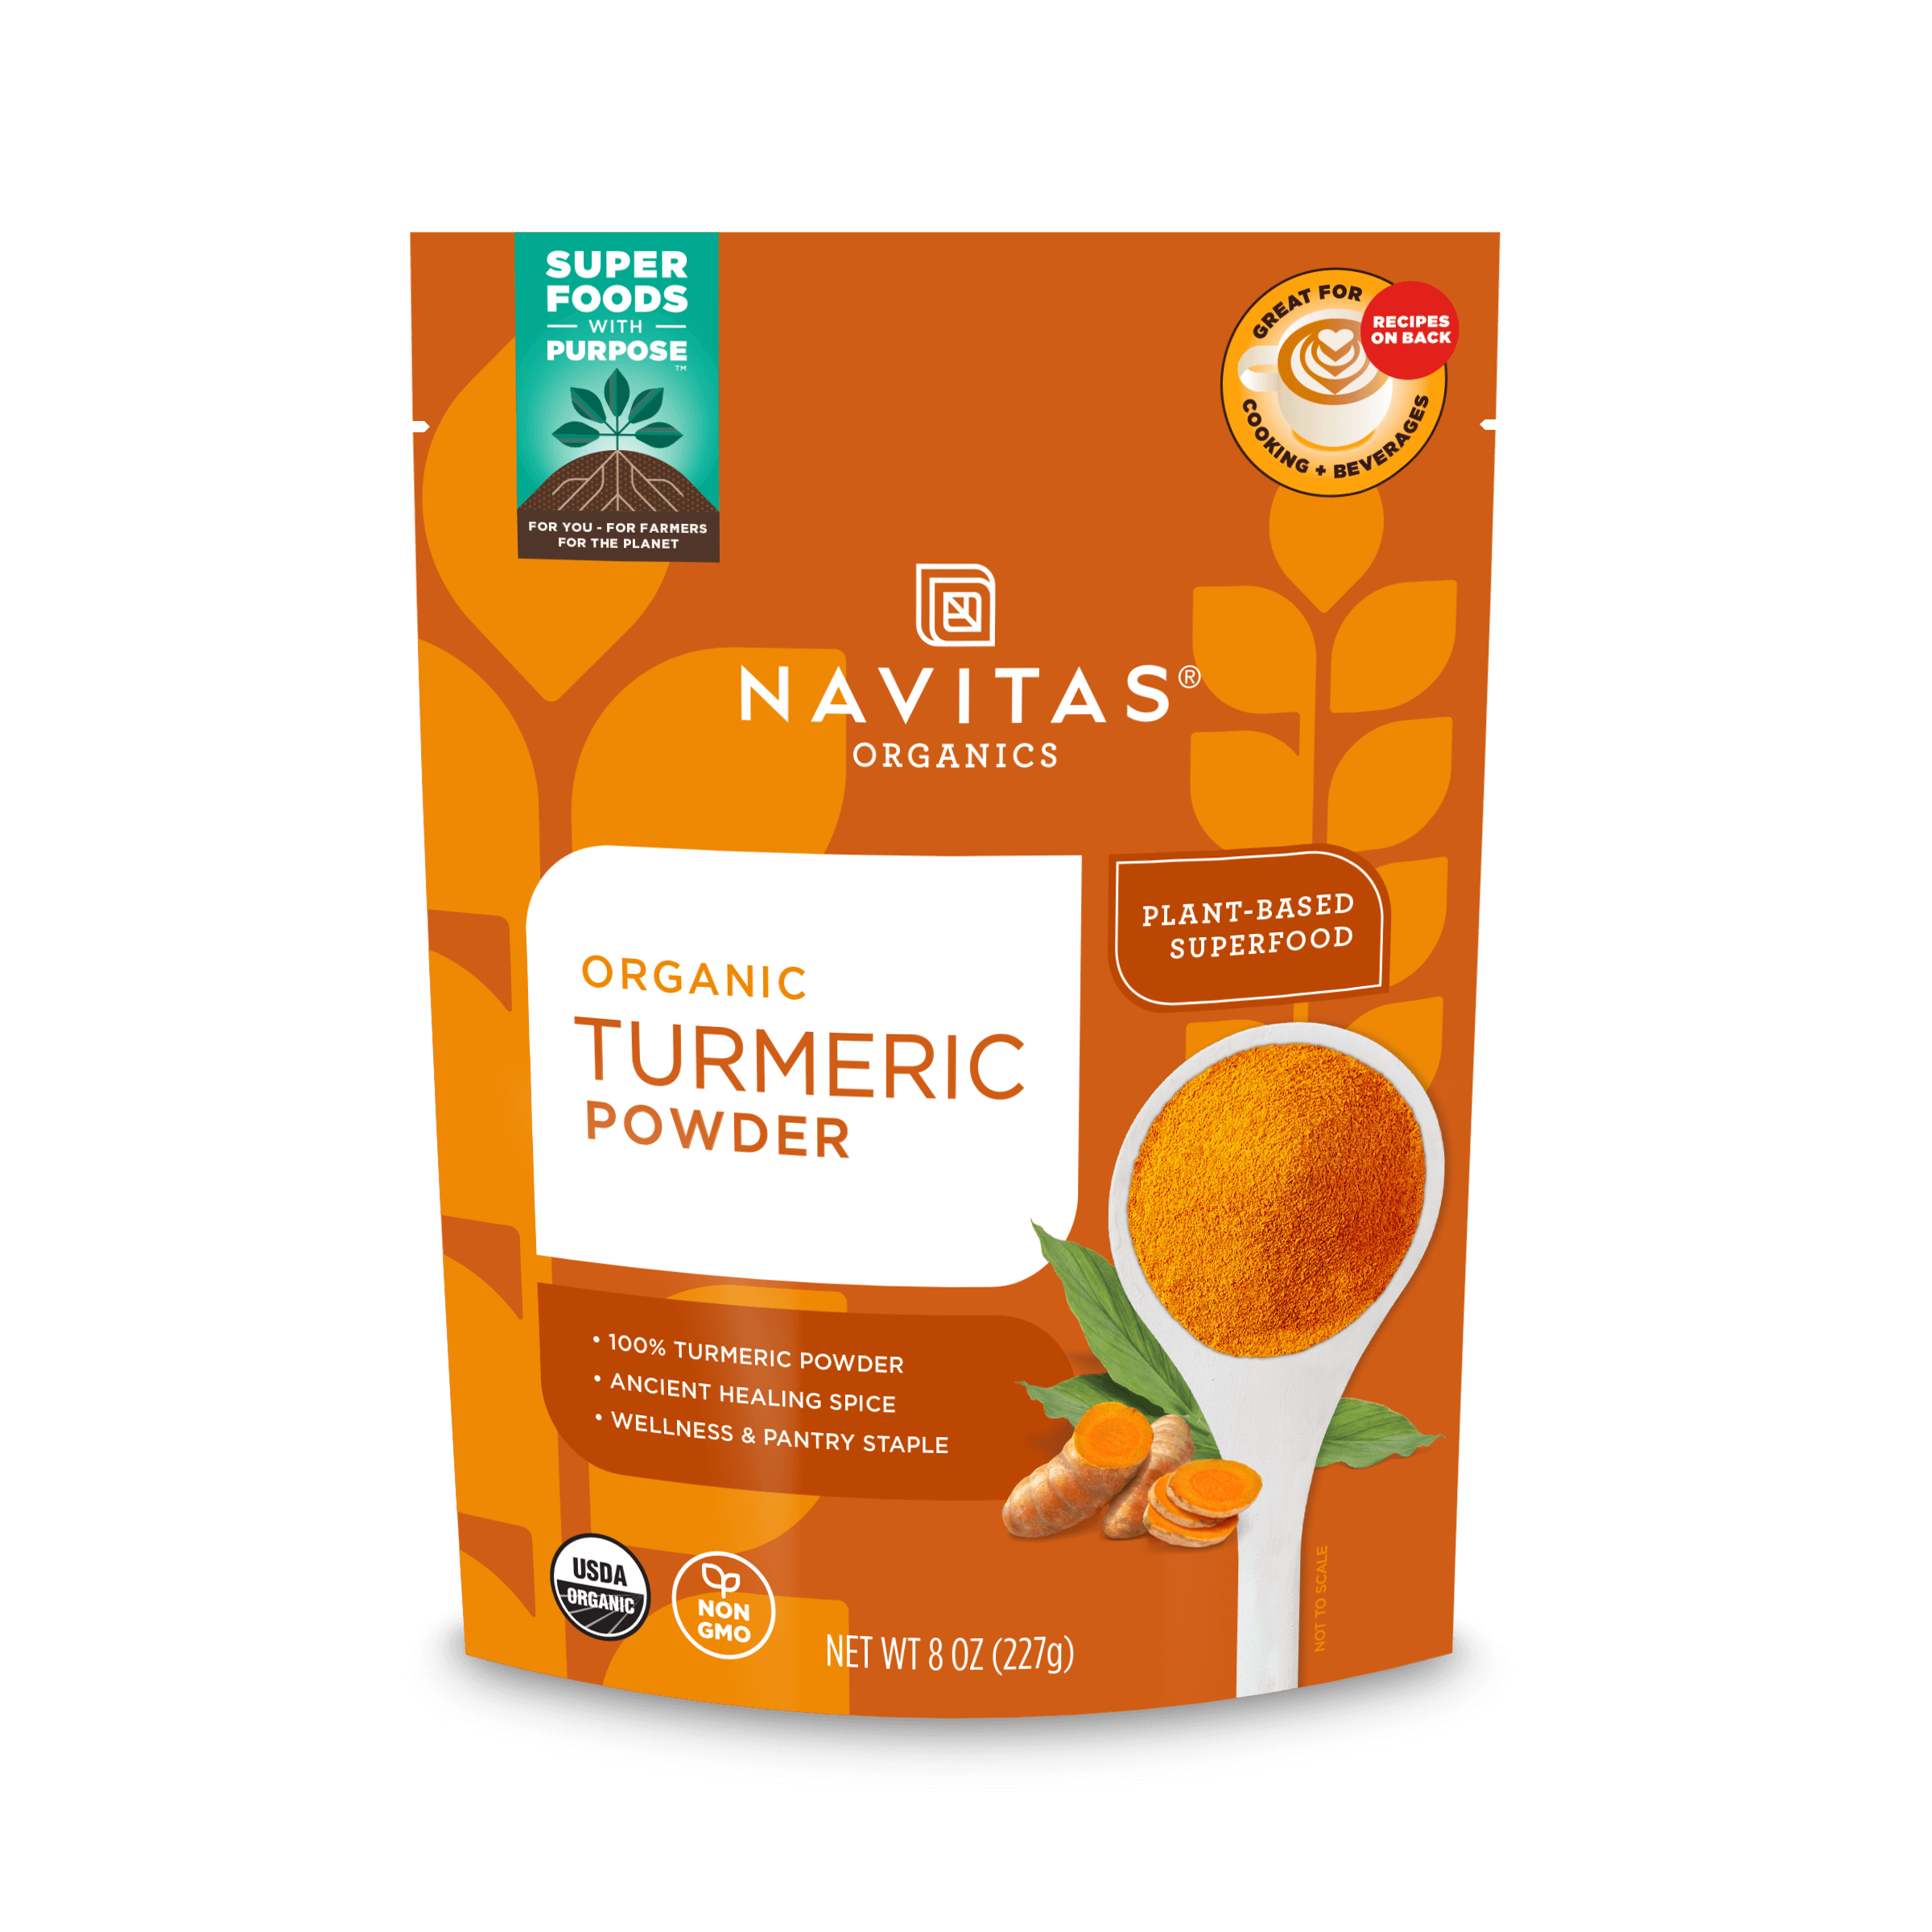 Navitas Organics Turmeric Powder 8 oz. front of bag.